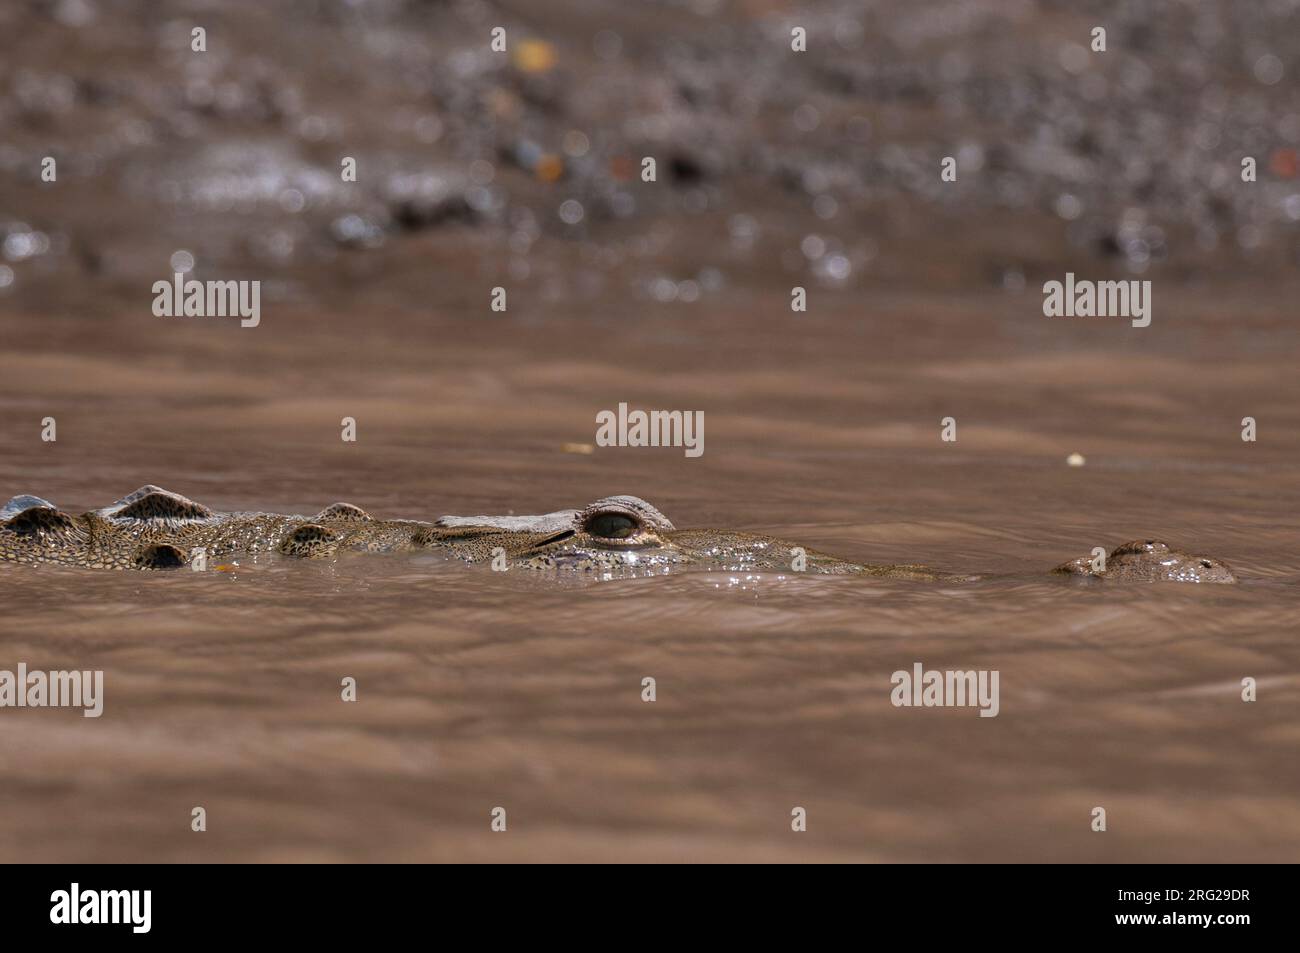 An American crocodile, Crocodylus acutus, swimming in muddy water. Costa Rica Palo Verde National Park, Costa Rica. Stock Photo